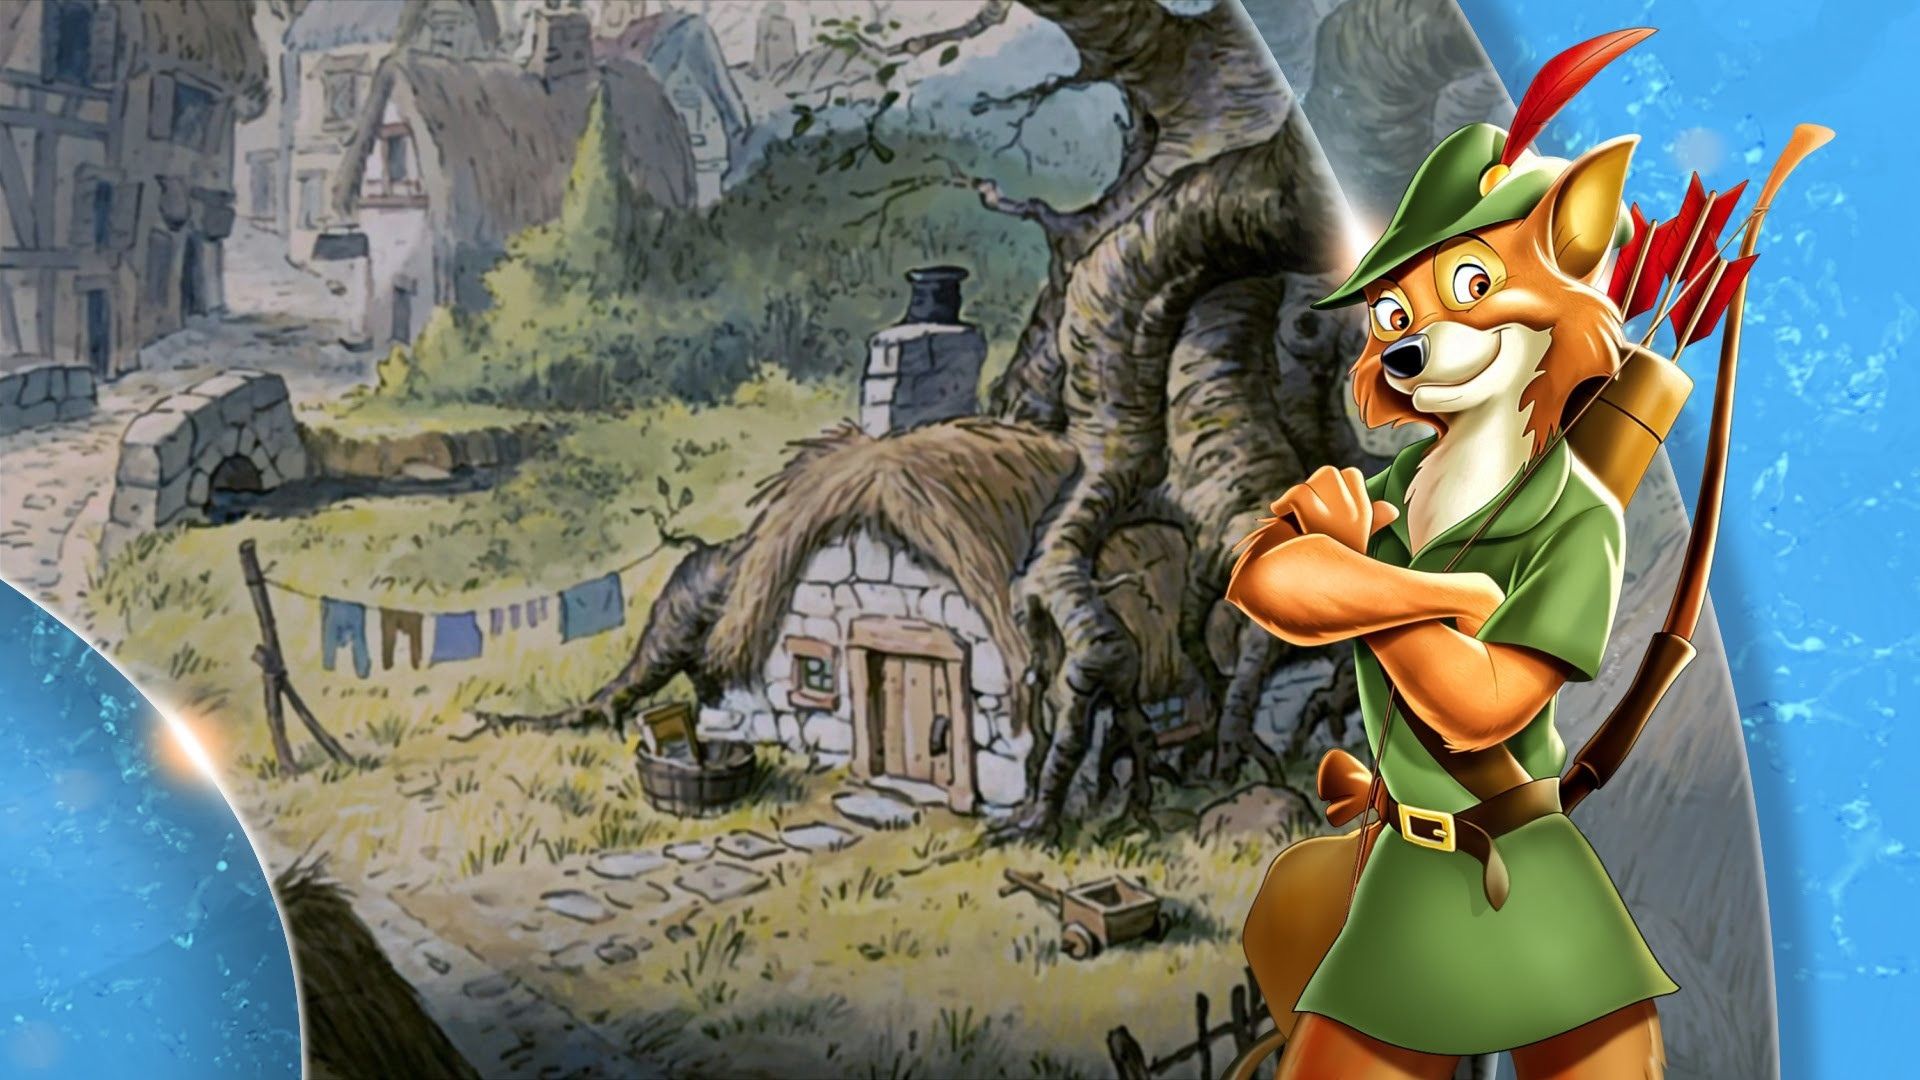 Disney Robin Hood Background